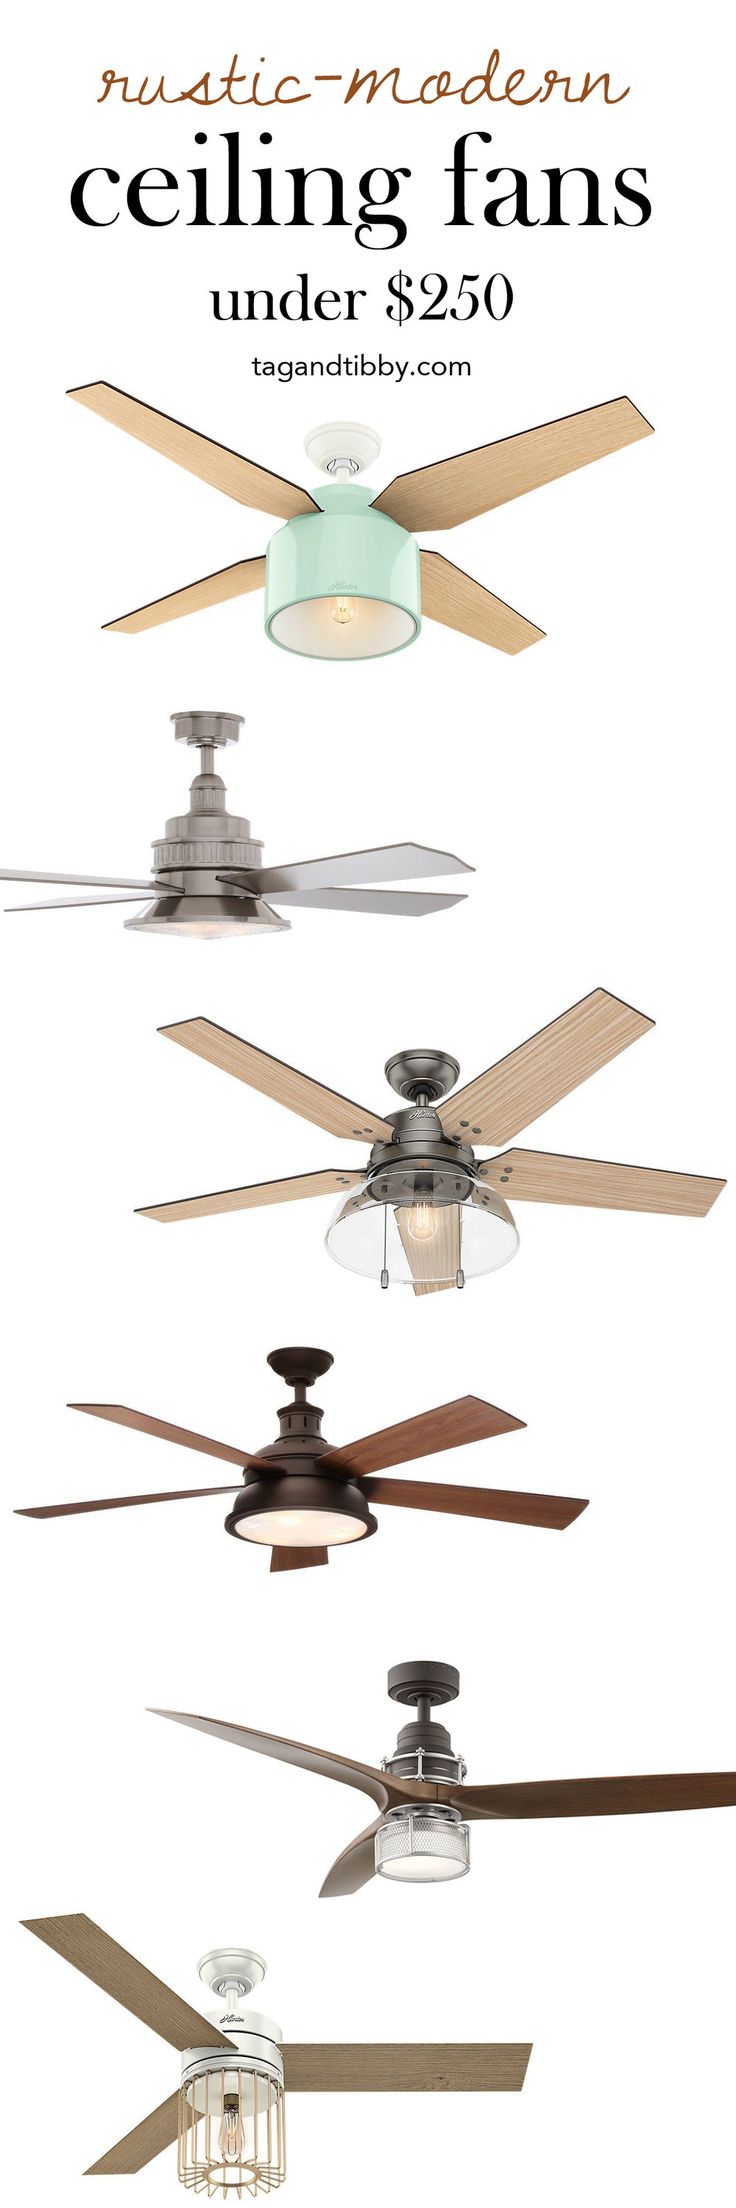 the best rustic-modern ceiling fans for under $250 #homeimprovement